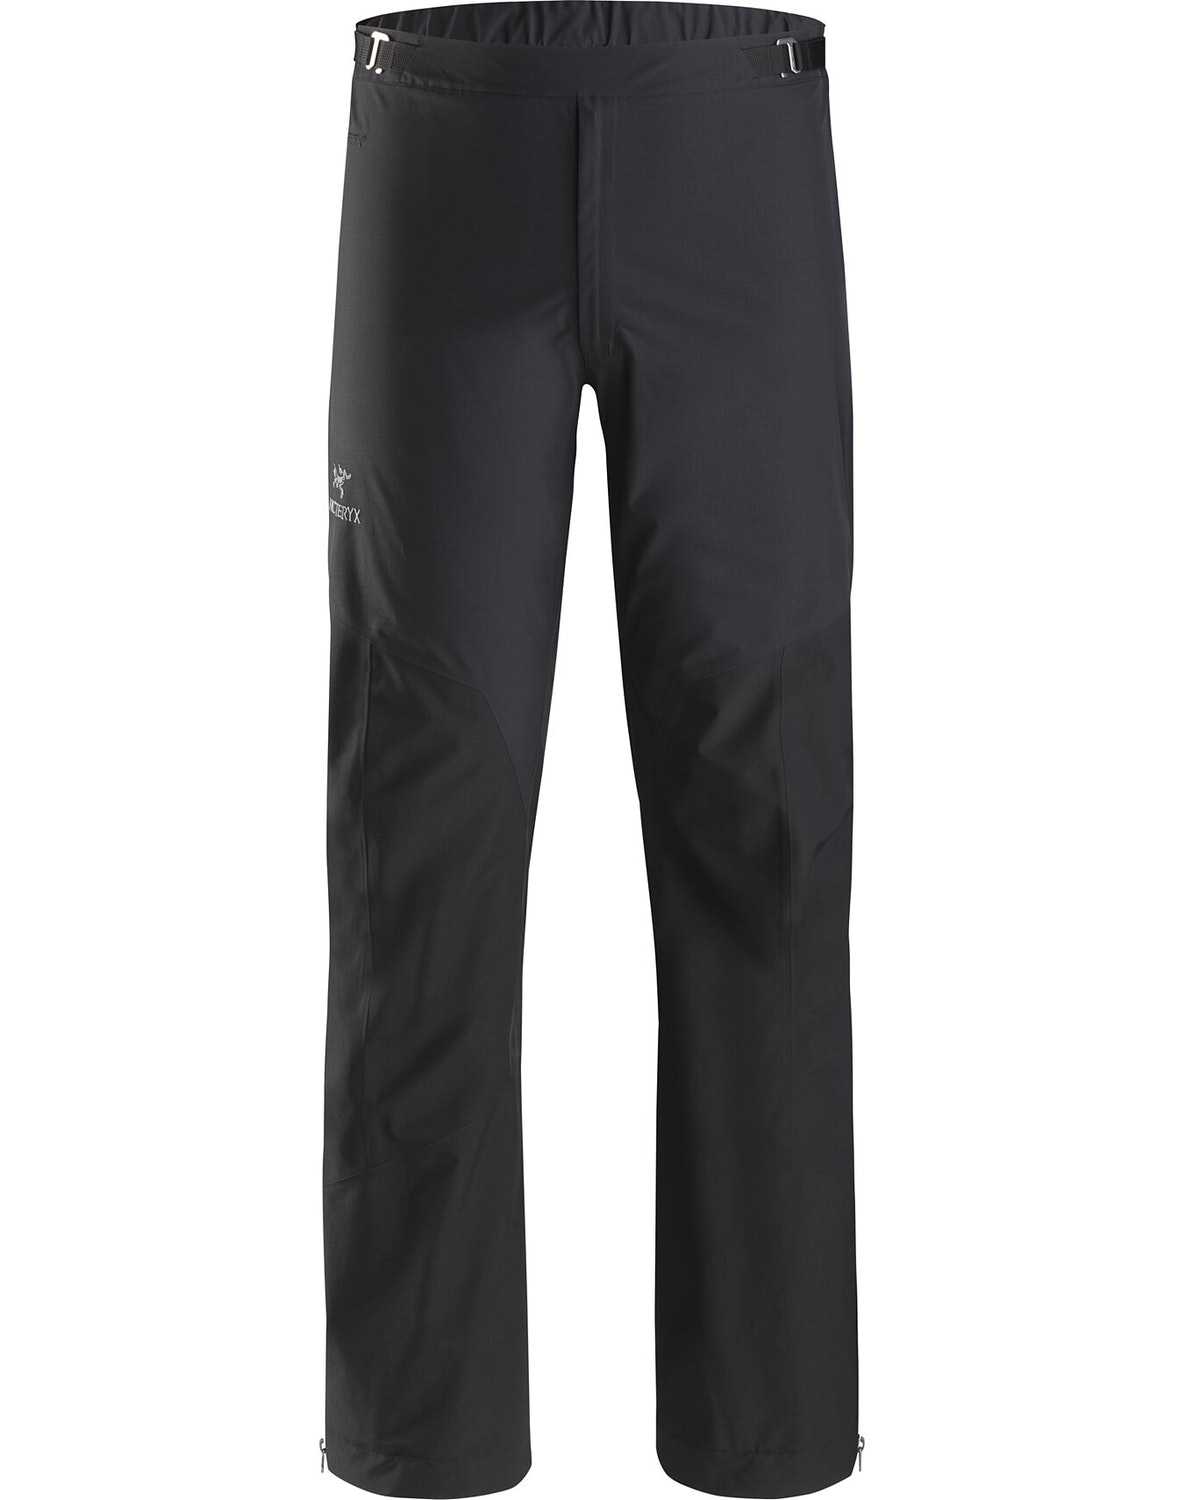 Pantaloni Impermeabili Arc'teryx Beta SL Uomo Nere - IT-1533519